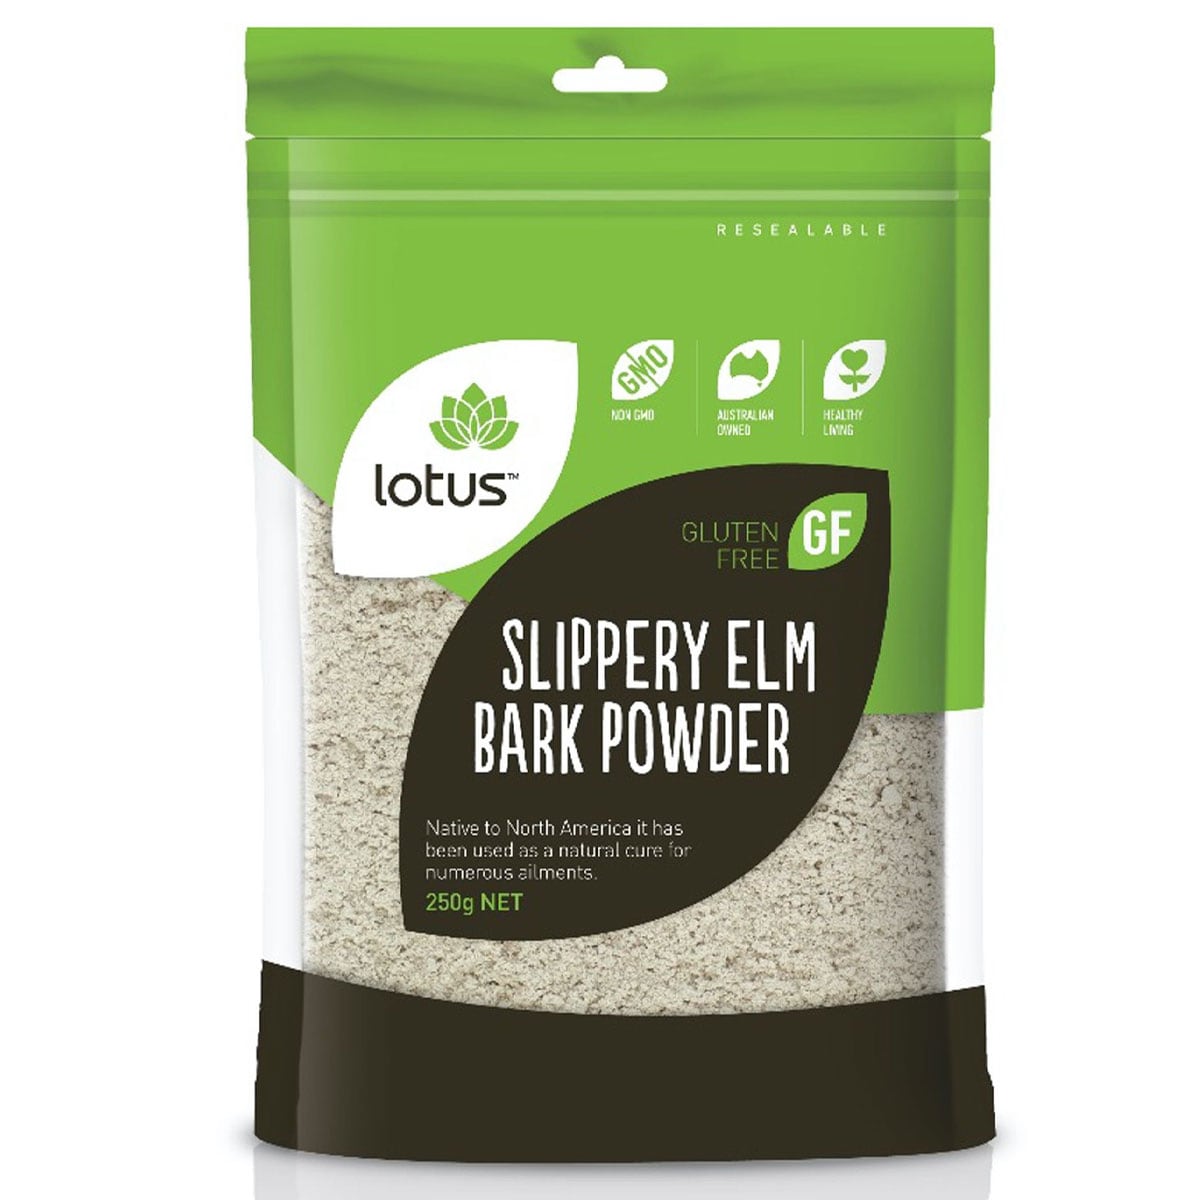 Lotus Slippery Elm Bark Powder 250g